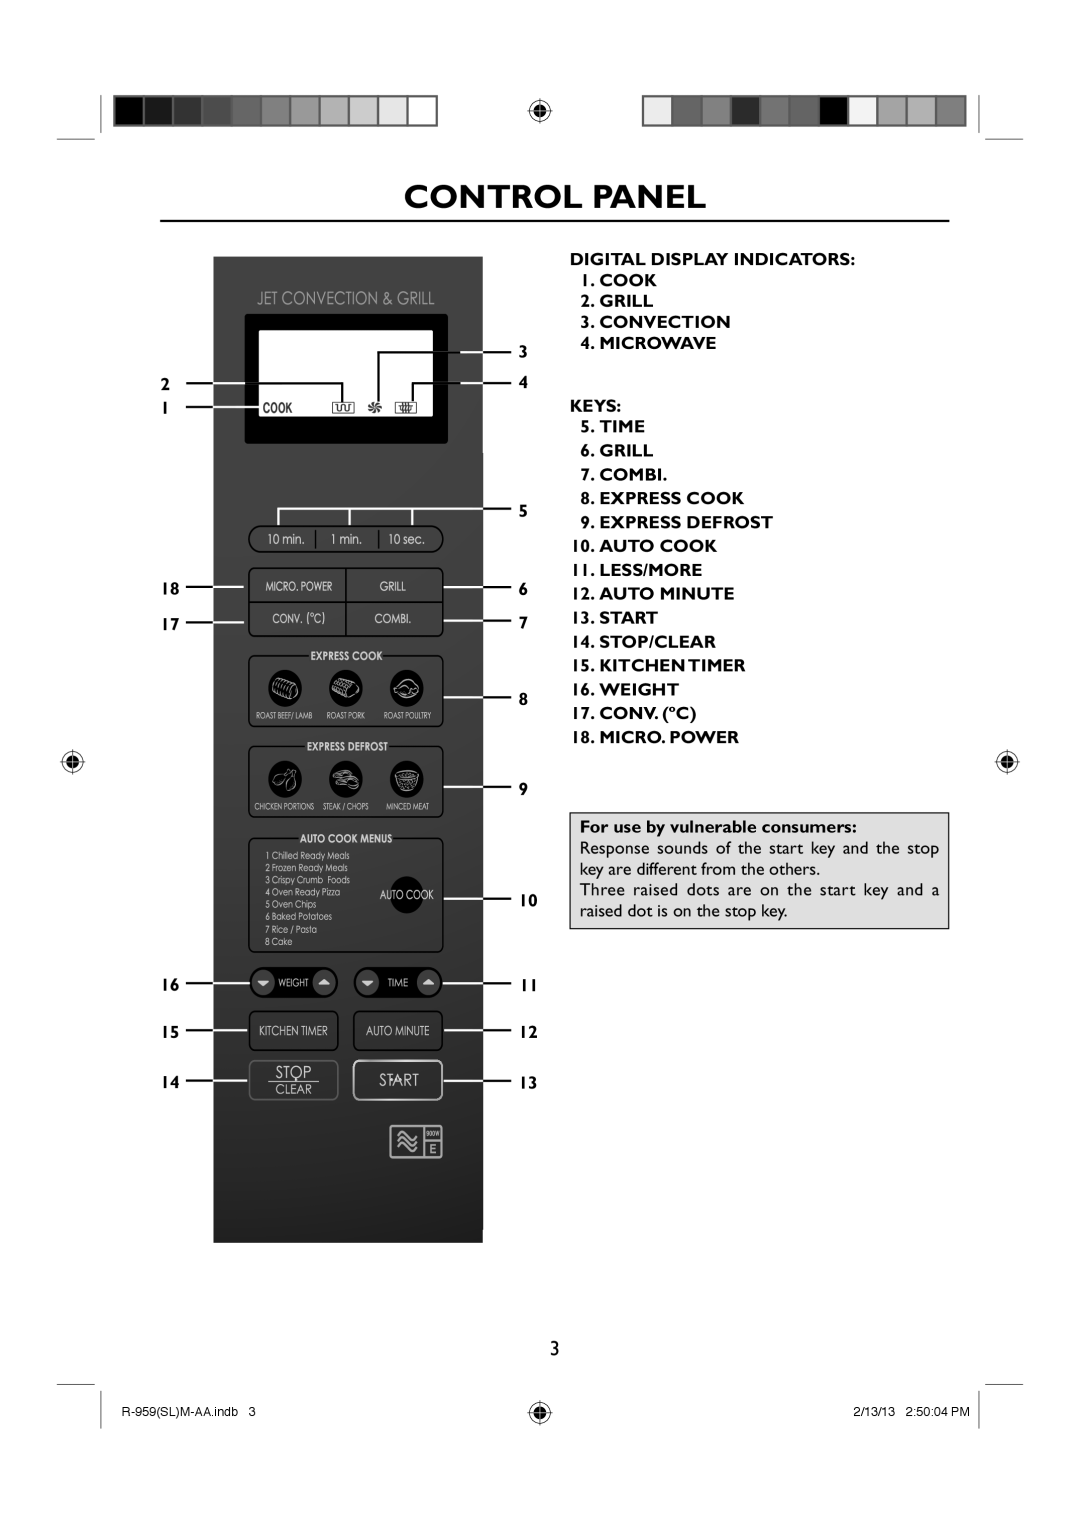 Sharp R-959(SL)M-AA manual Control Panel, Digital Display Indicators, Cook, Grill, Convection, Microwave, Keys, Time, Combi 